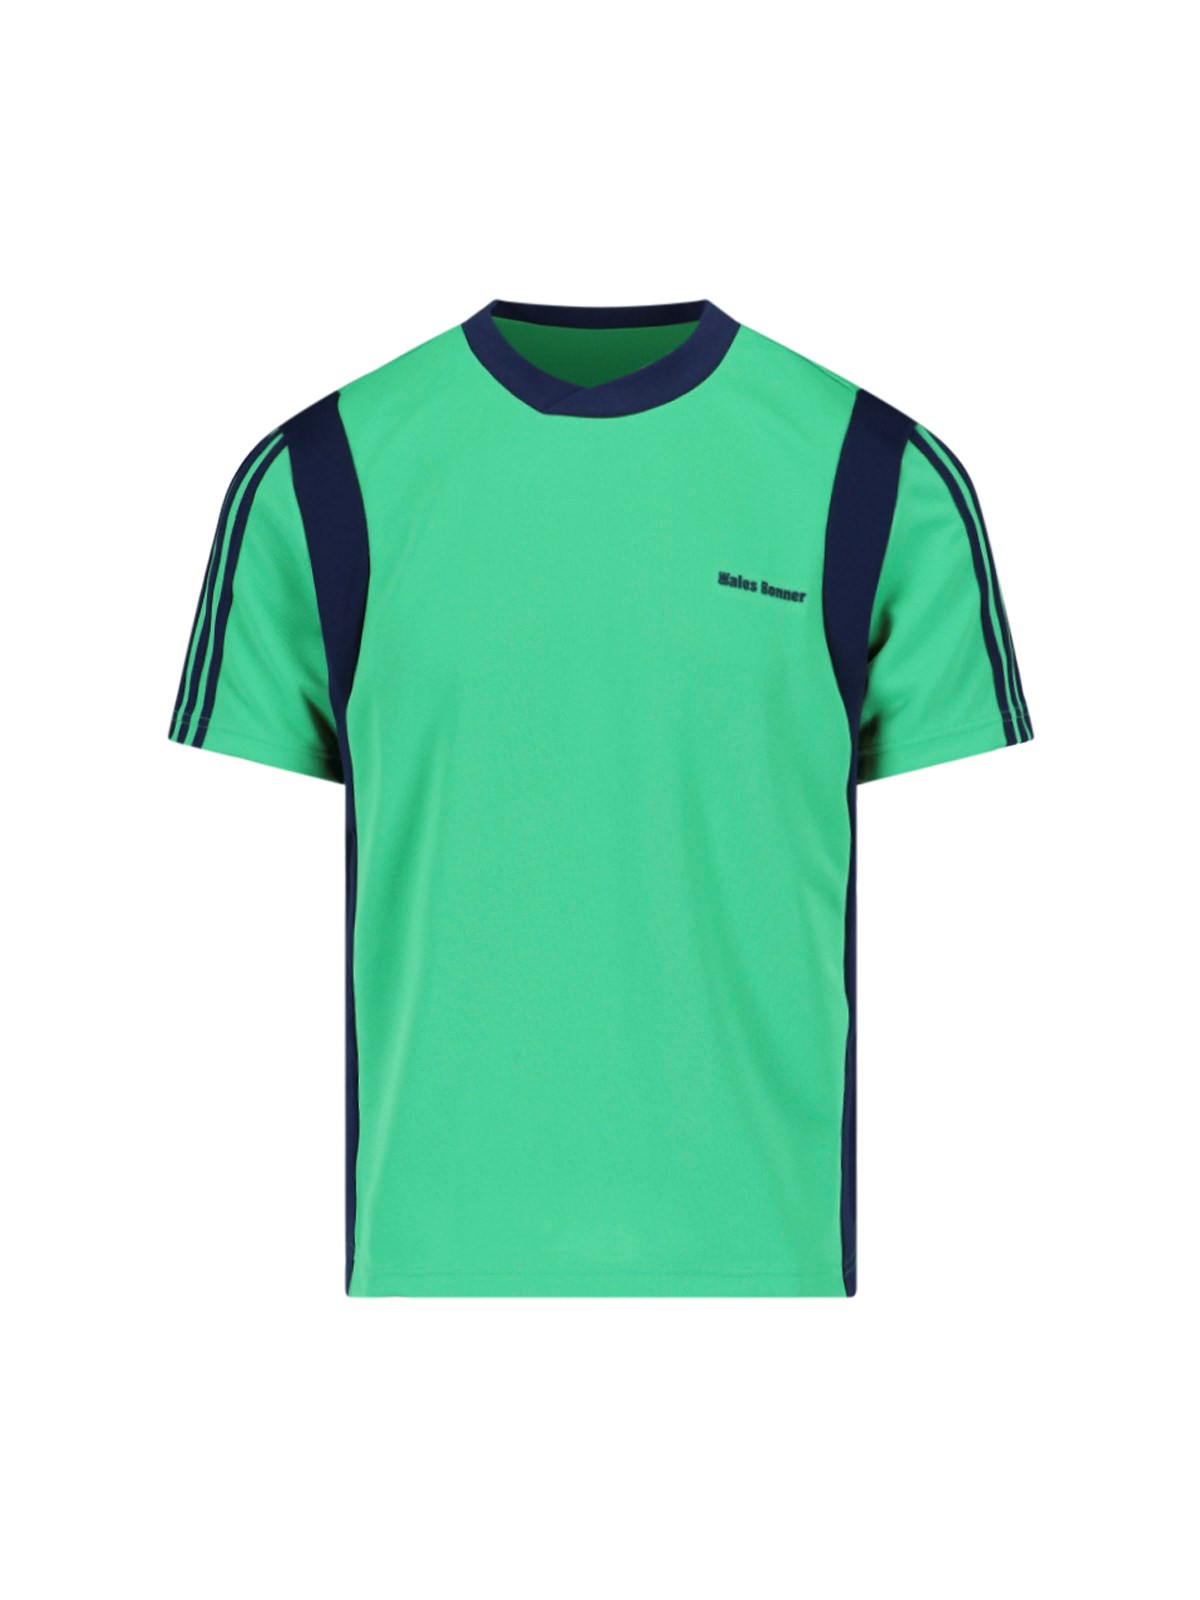 Shop Adidas X Wales Bonner Sports T-shirt In Green